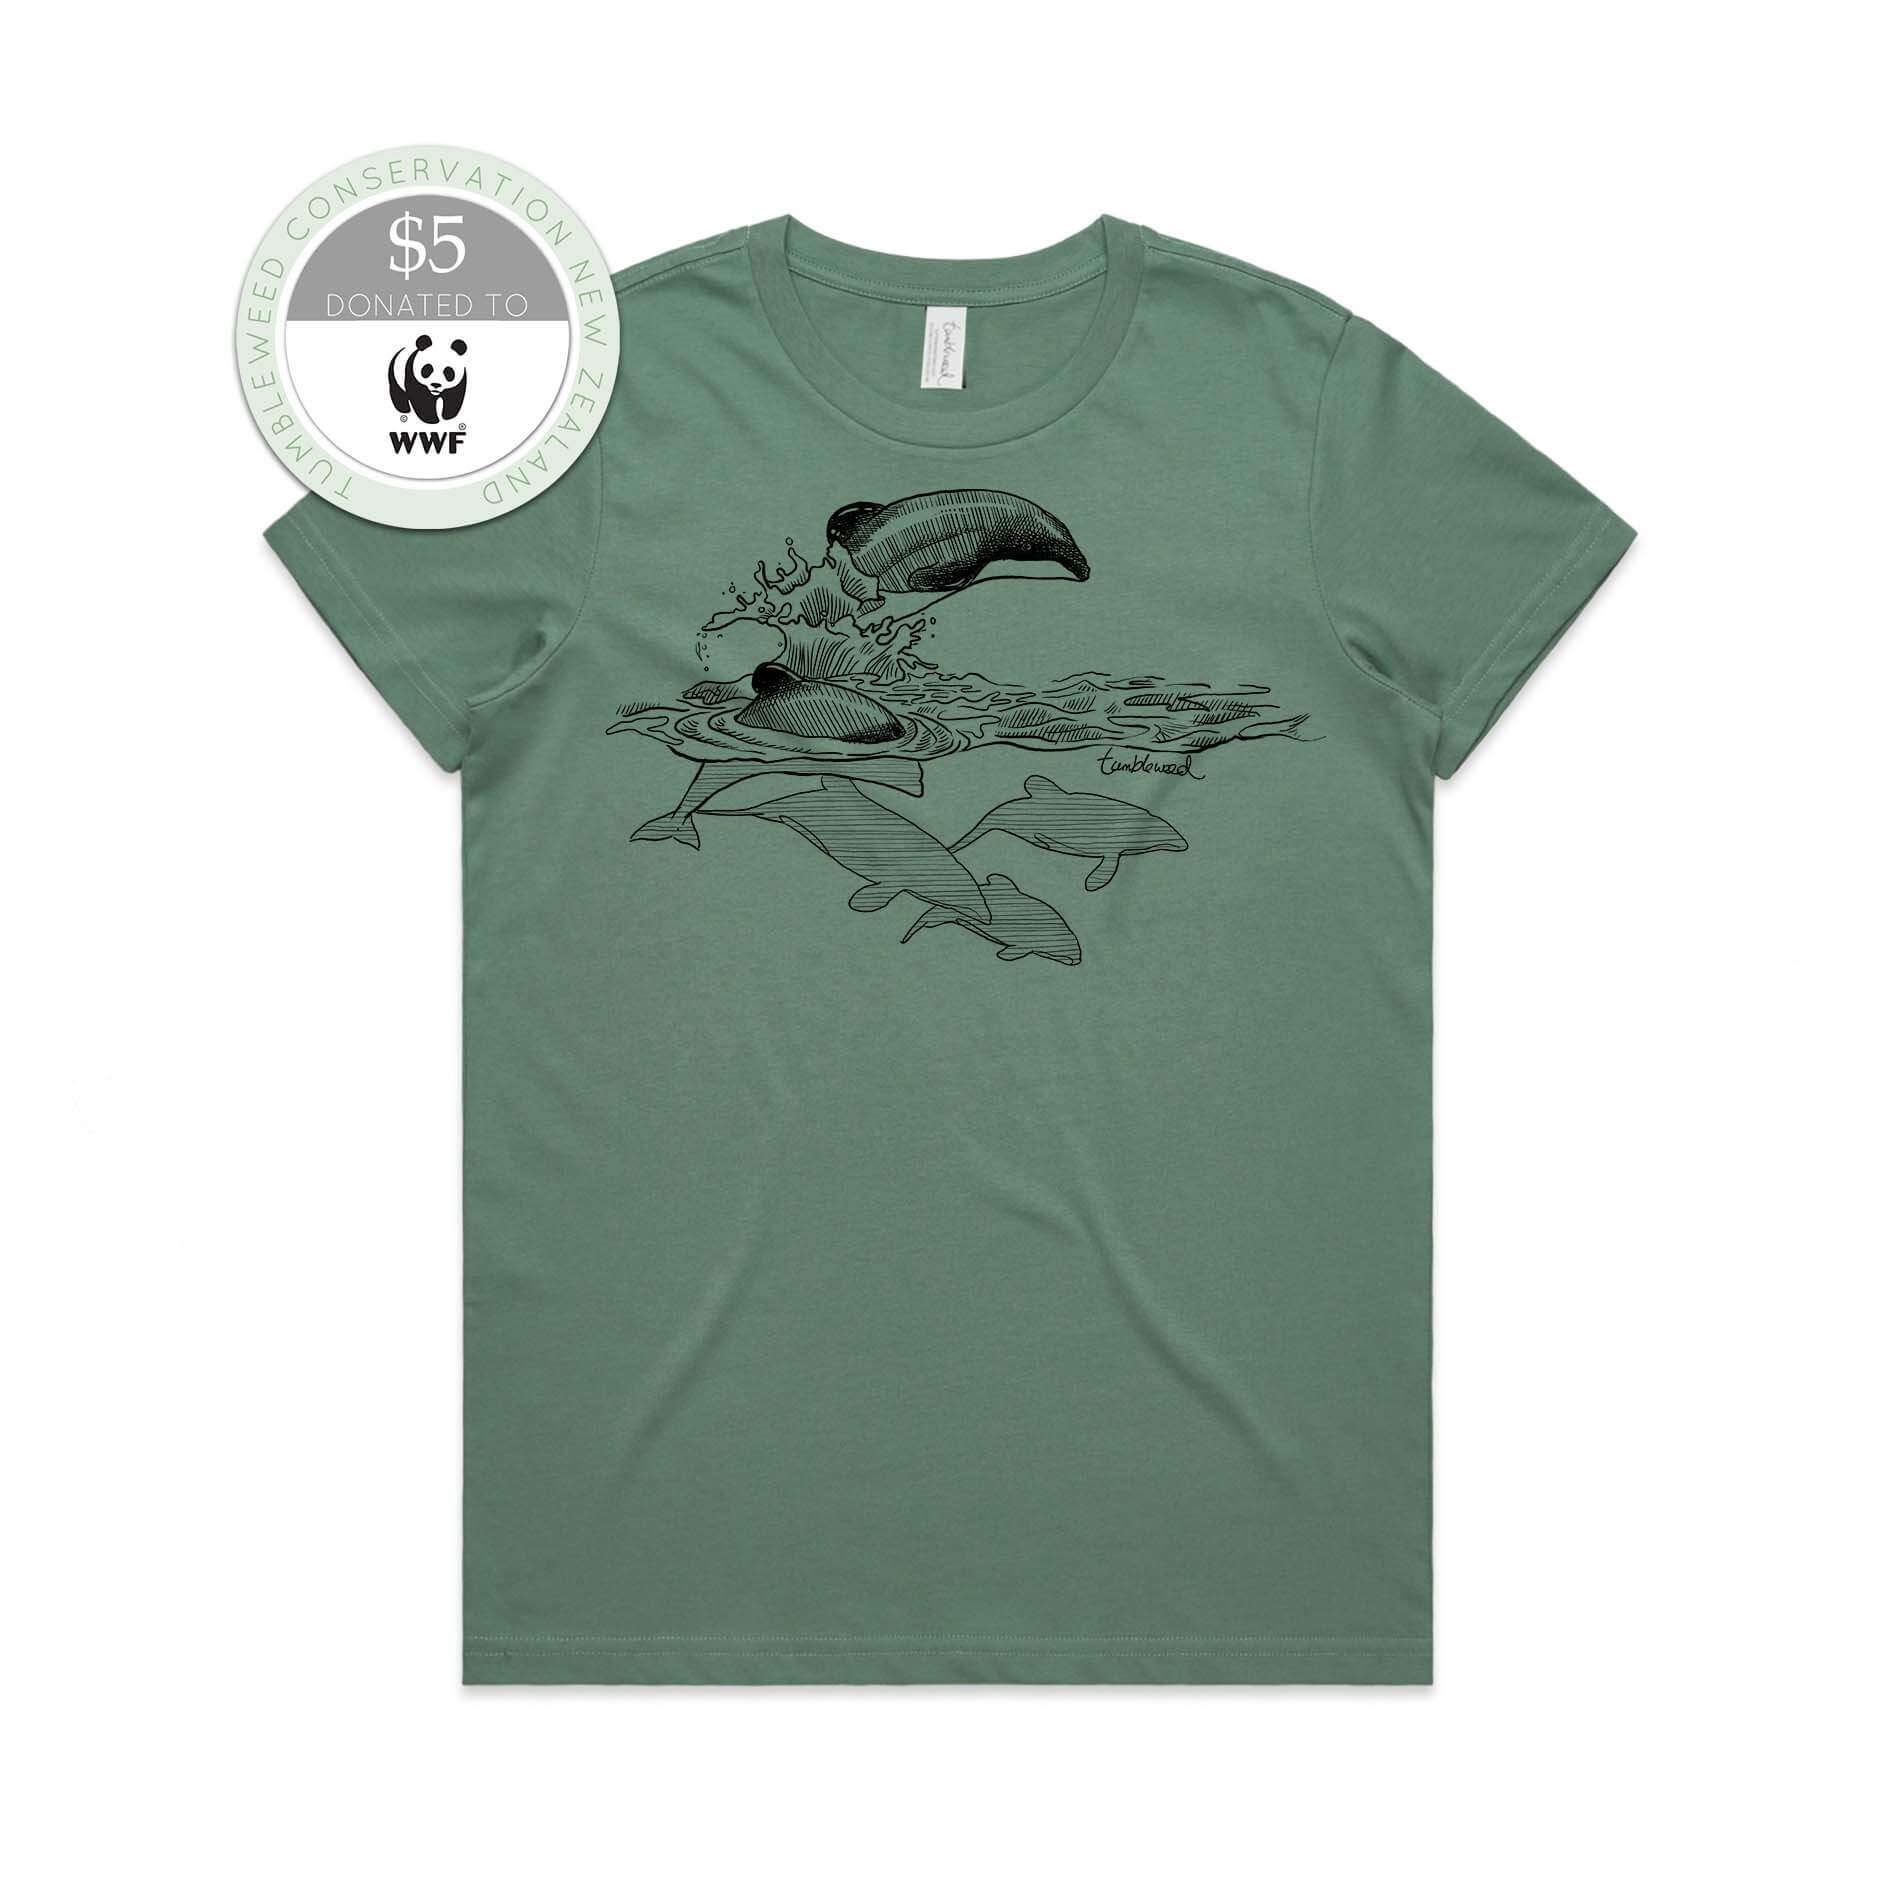 Sage, female t-shirt featuring a screen printed Māui dolphin design.